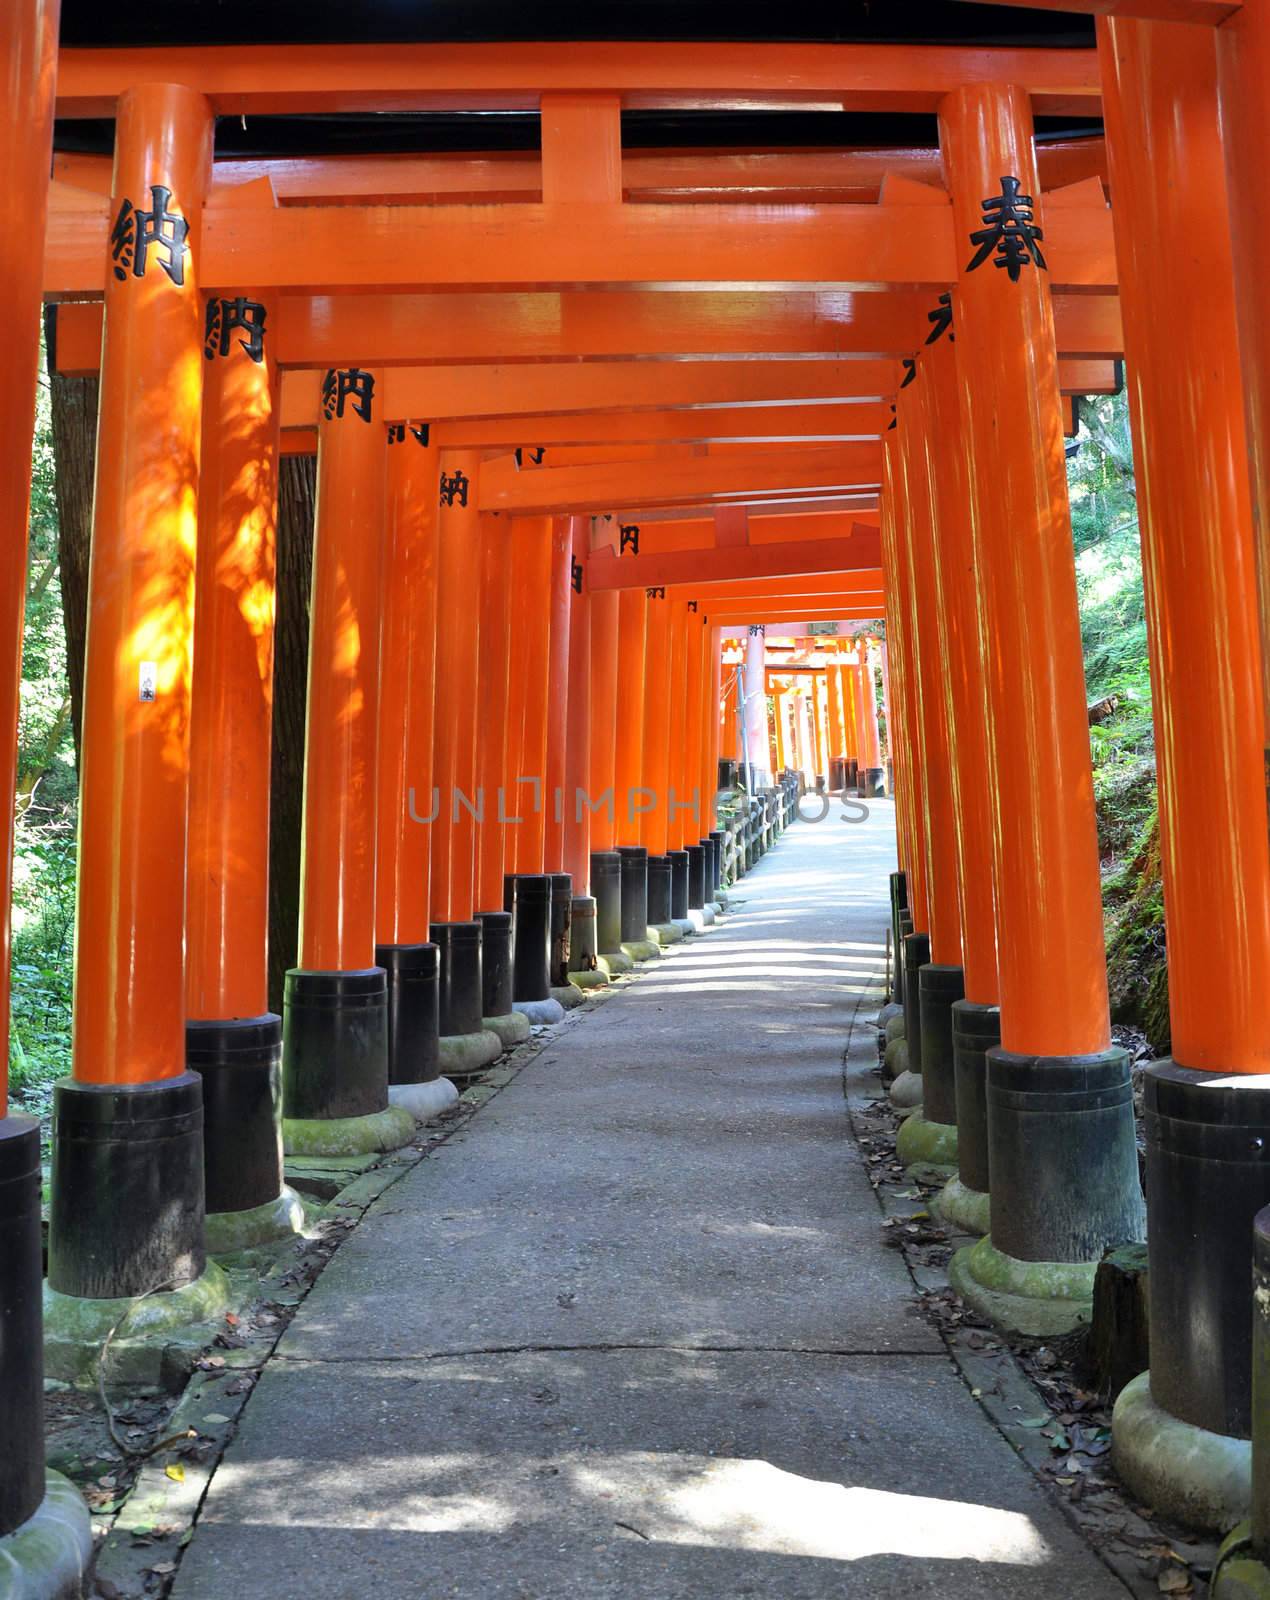  Thousand torii gates in Fushimi Inari Shrine, Kyoto, Japan  by siraanamwong